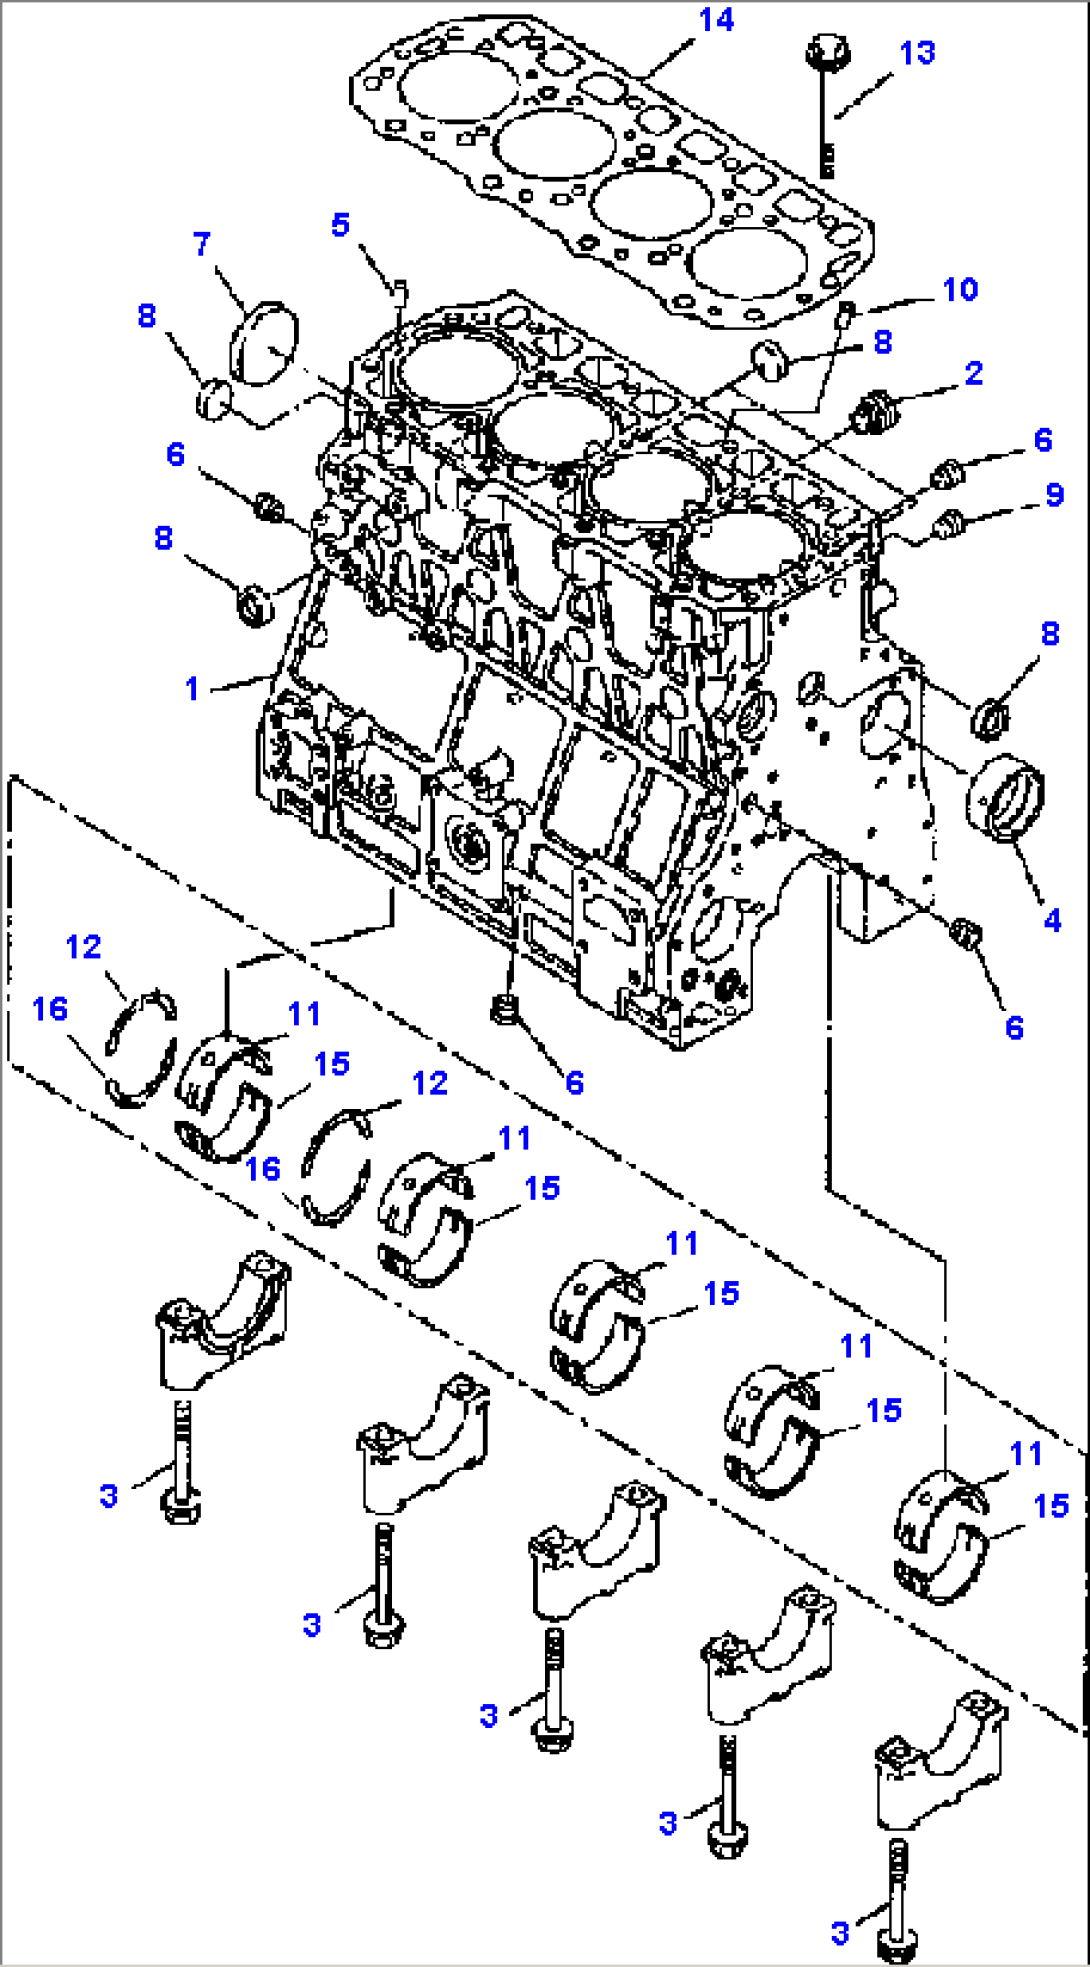 FIG. A0206-03A0 CYLINDER BLOCK - TURBO ENGINE